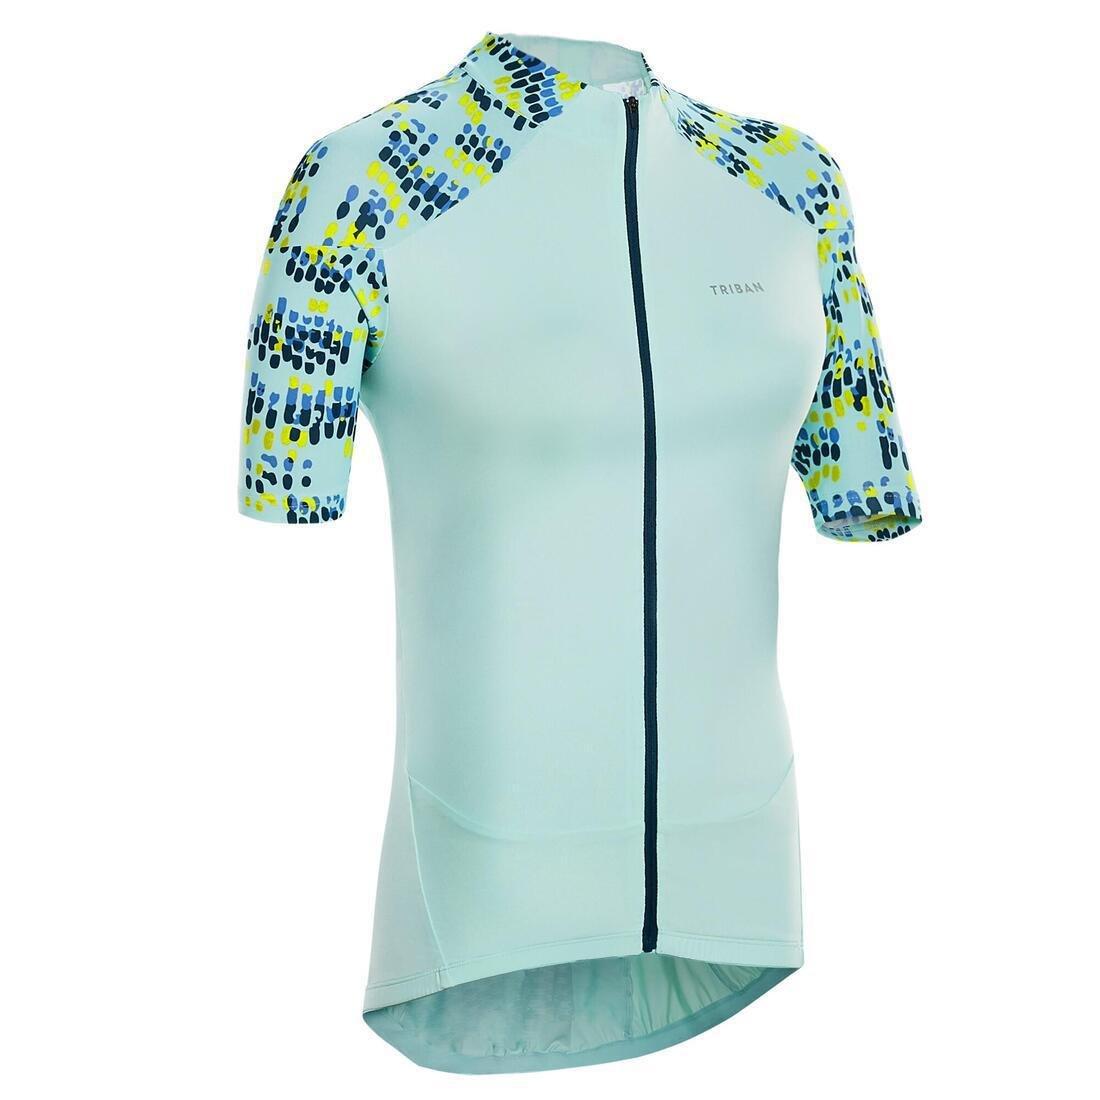 VAN RYSEL - Women's Cycling Short-Sleeved Jersey 500 - Sunplant, BORDEAUX